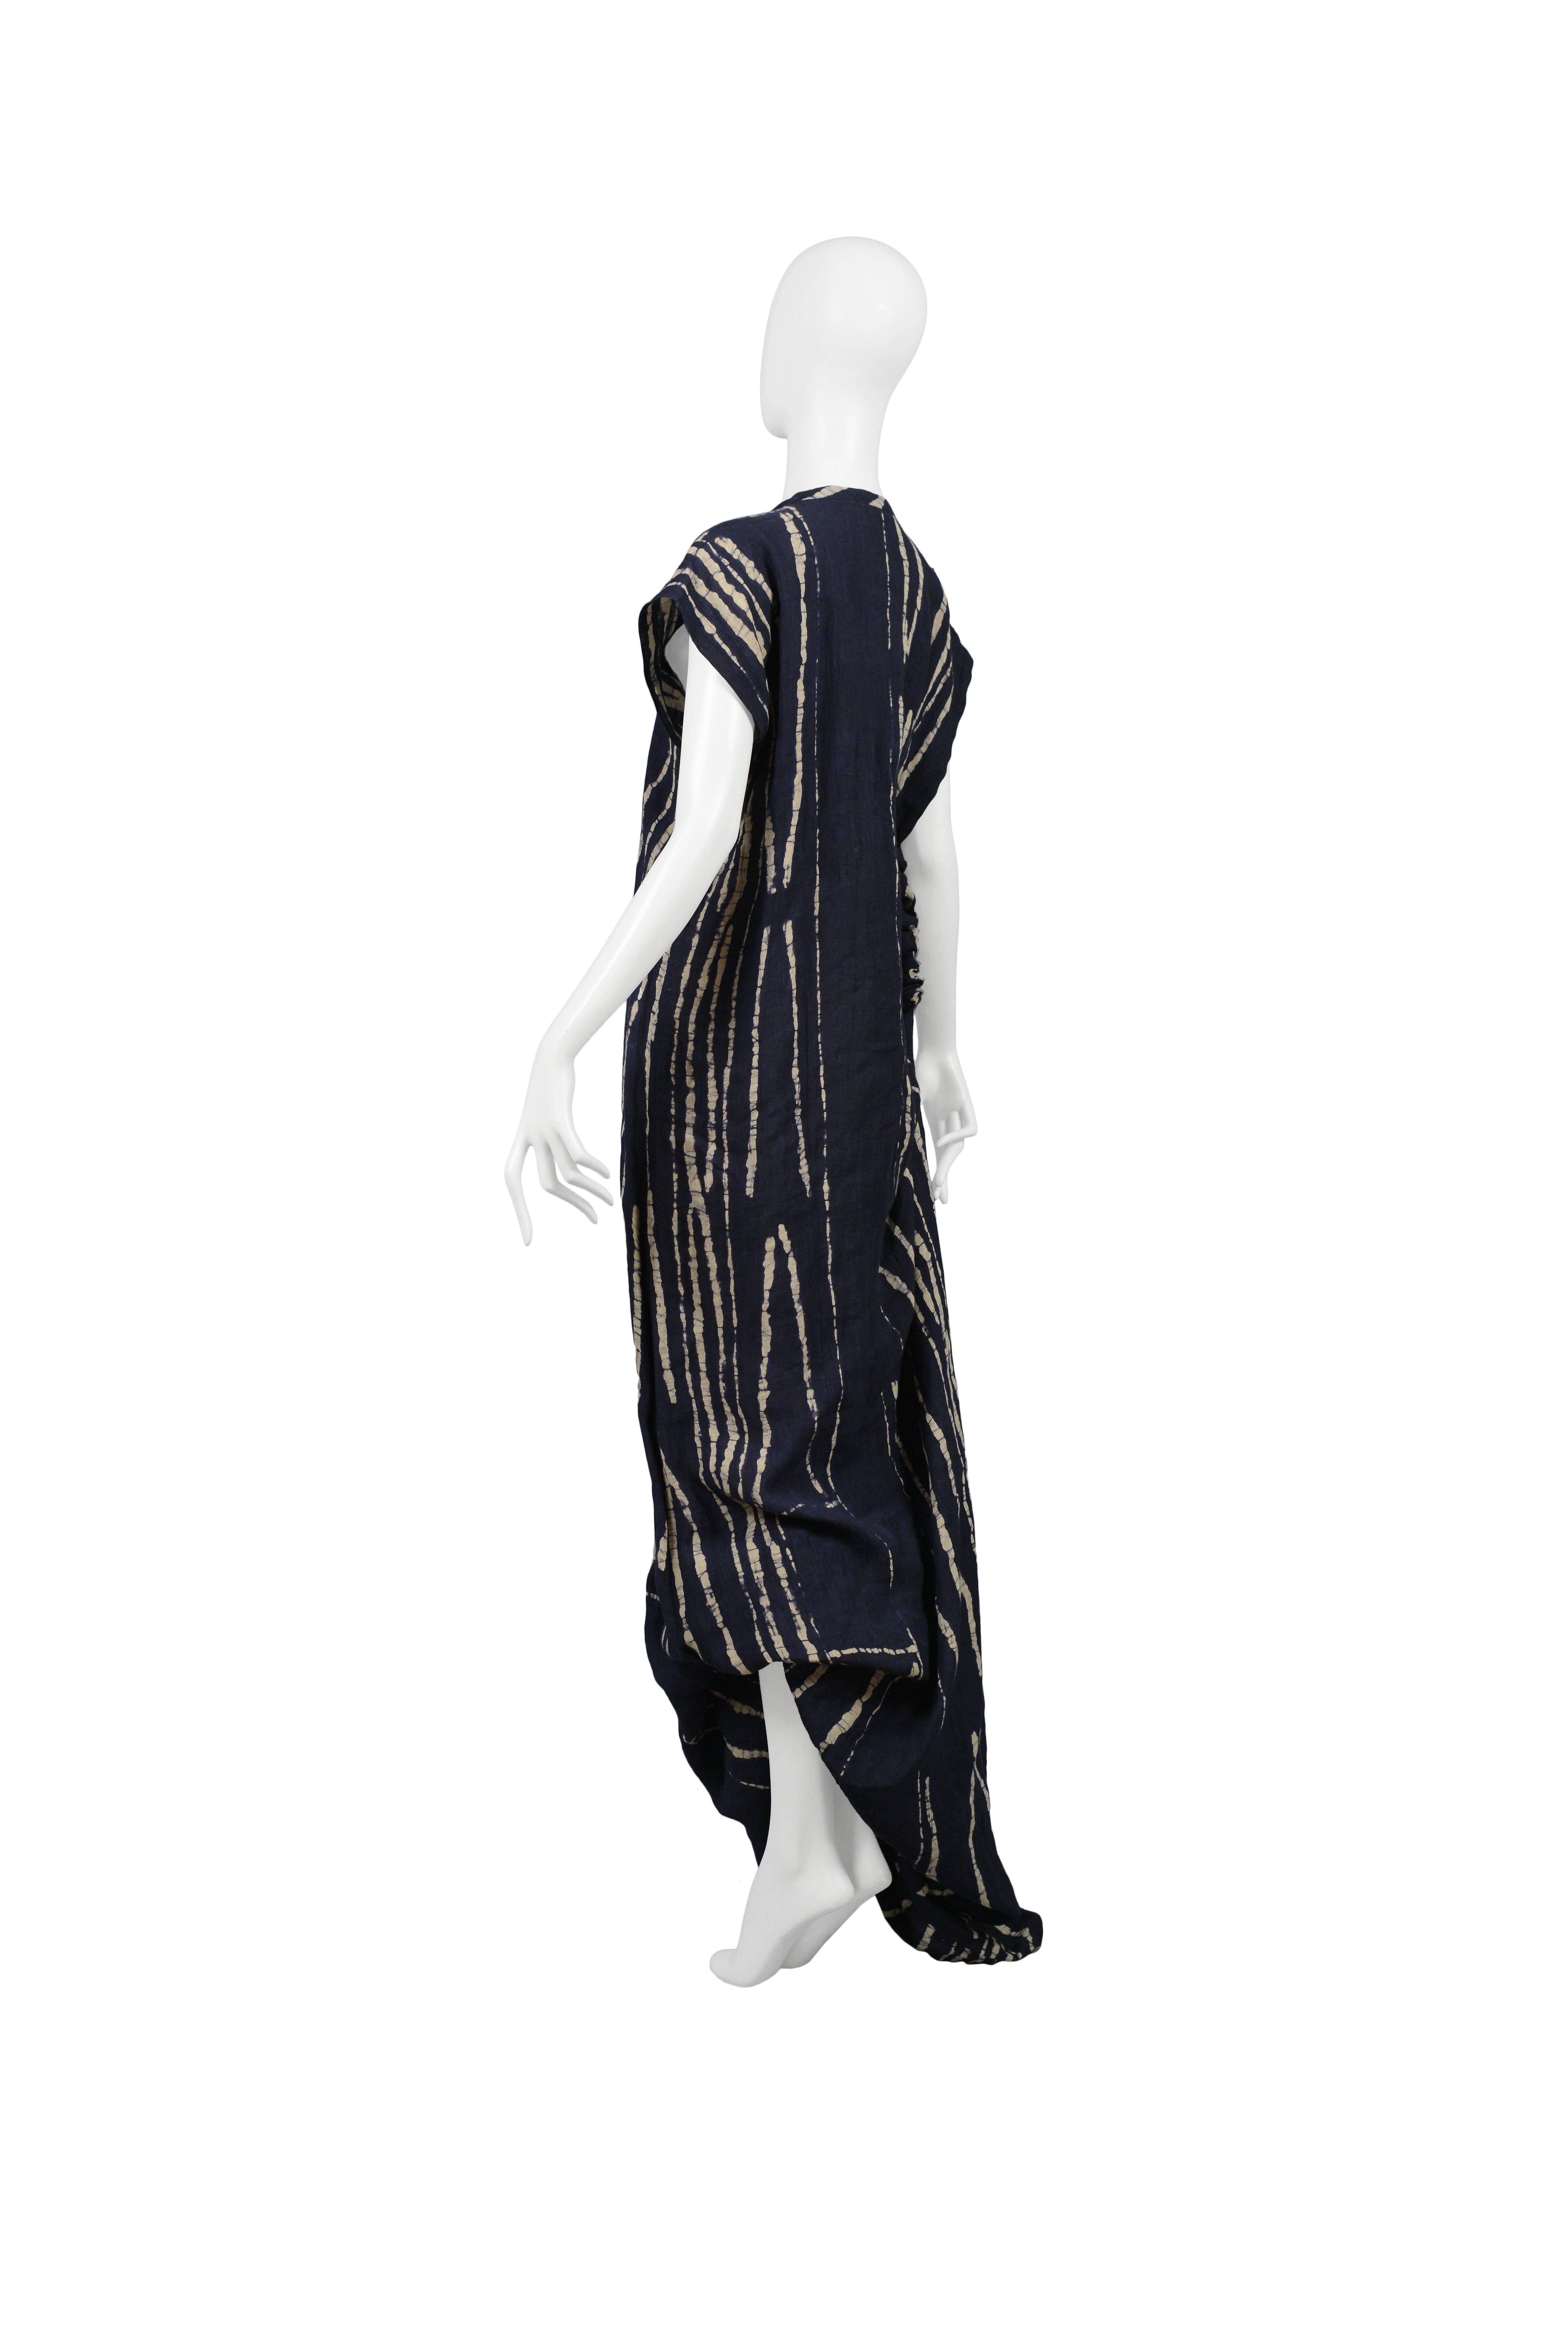 Comme des Garcons Navy Batik Linen Dress 1984 In Excellent Condition In Los Angeles, CA